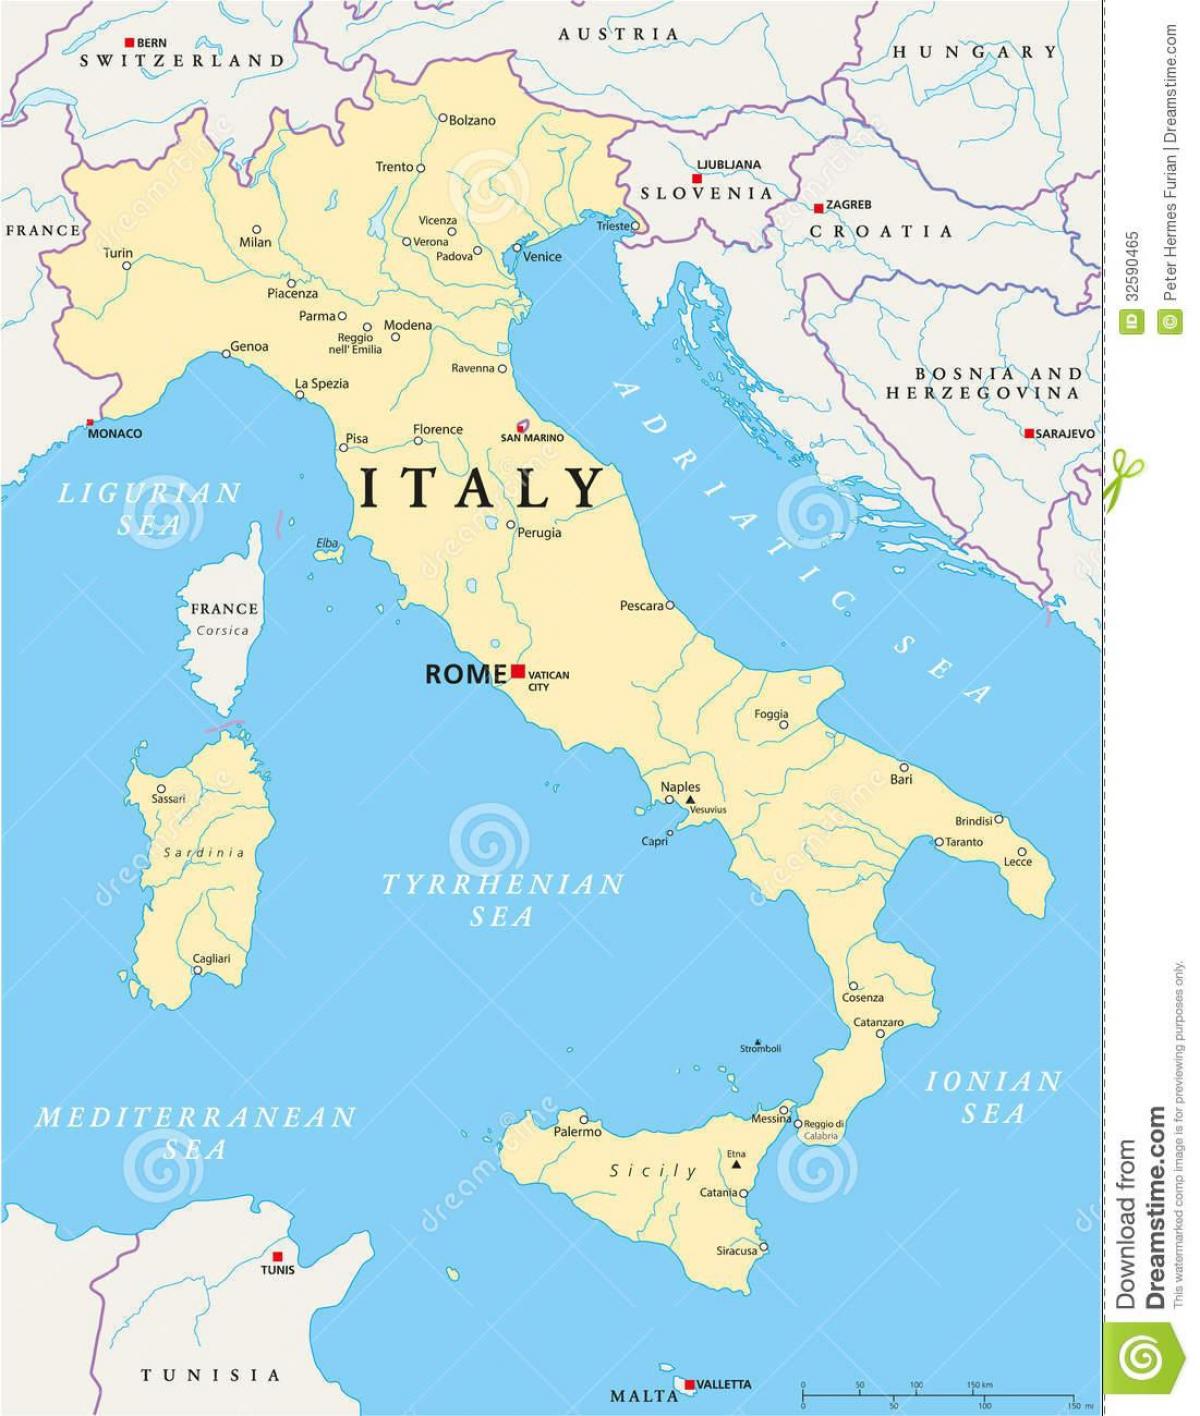 karta italije capri Karta Italije pokazuje jezera   Italija karta jezera (Južna Europa  karta italije capri